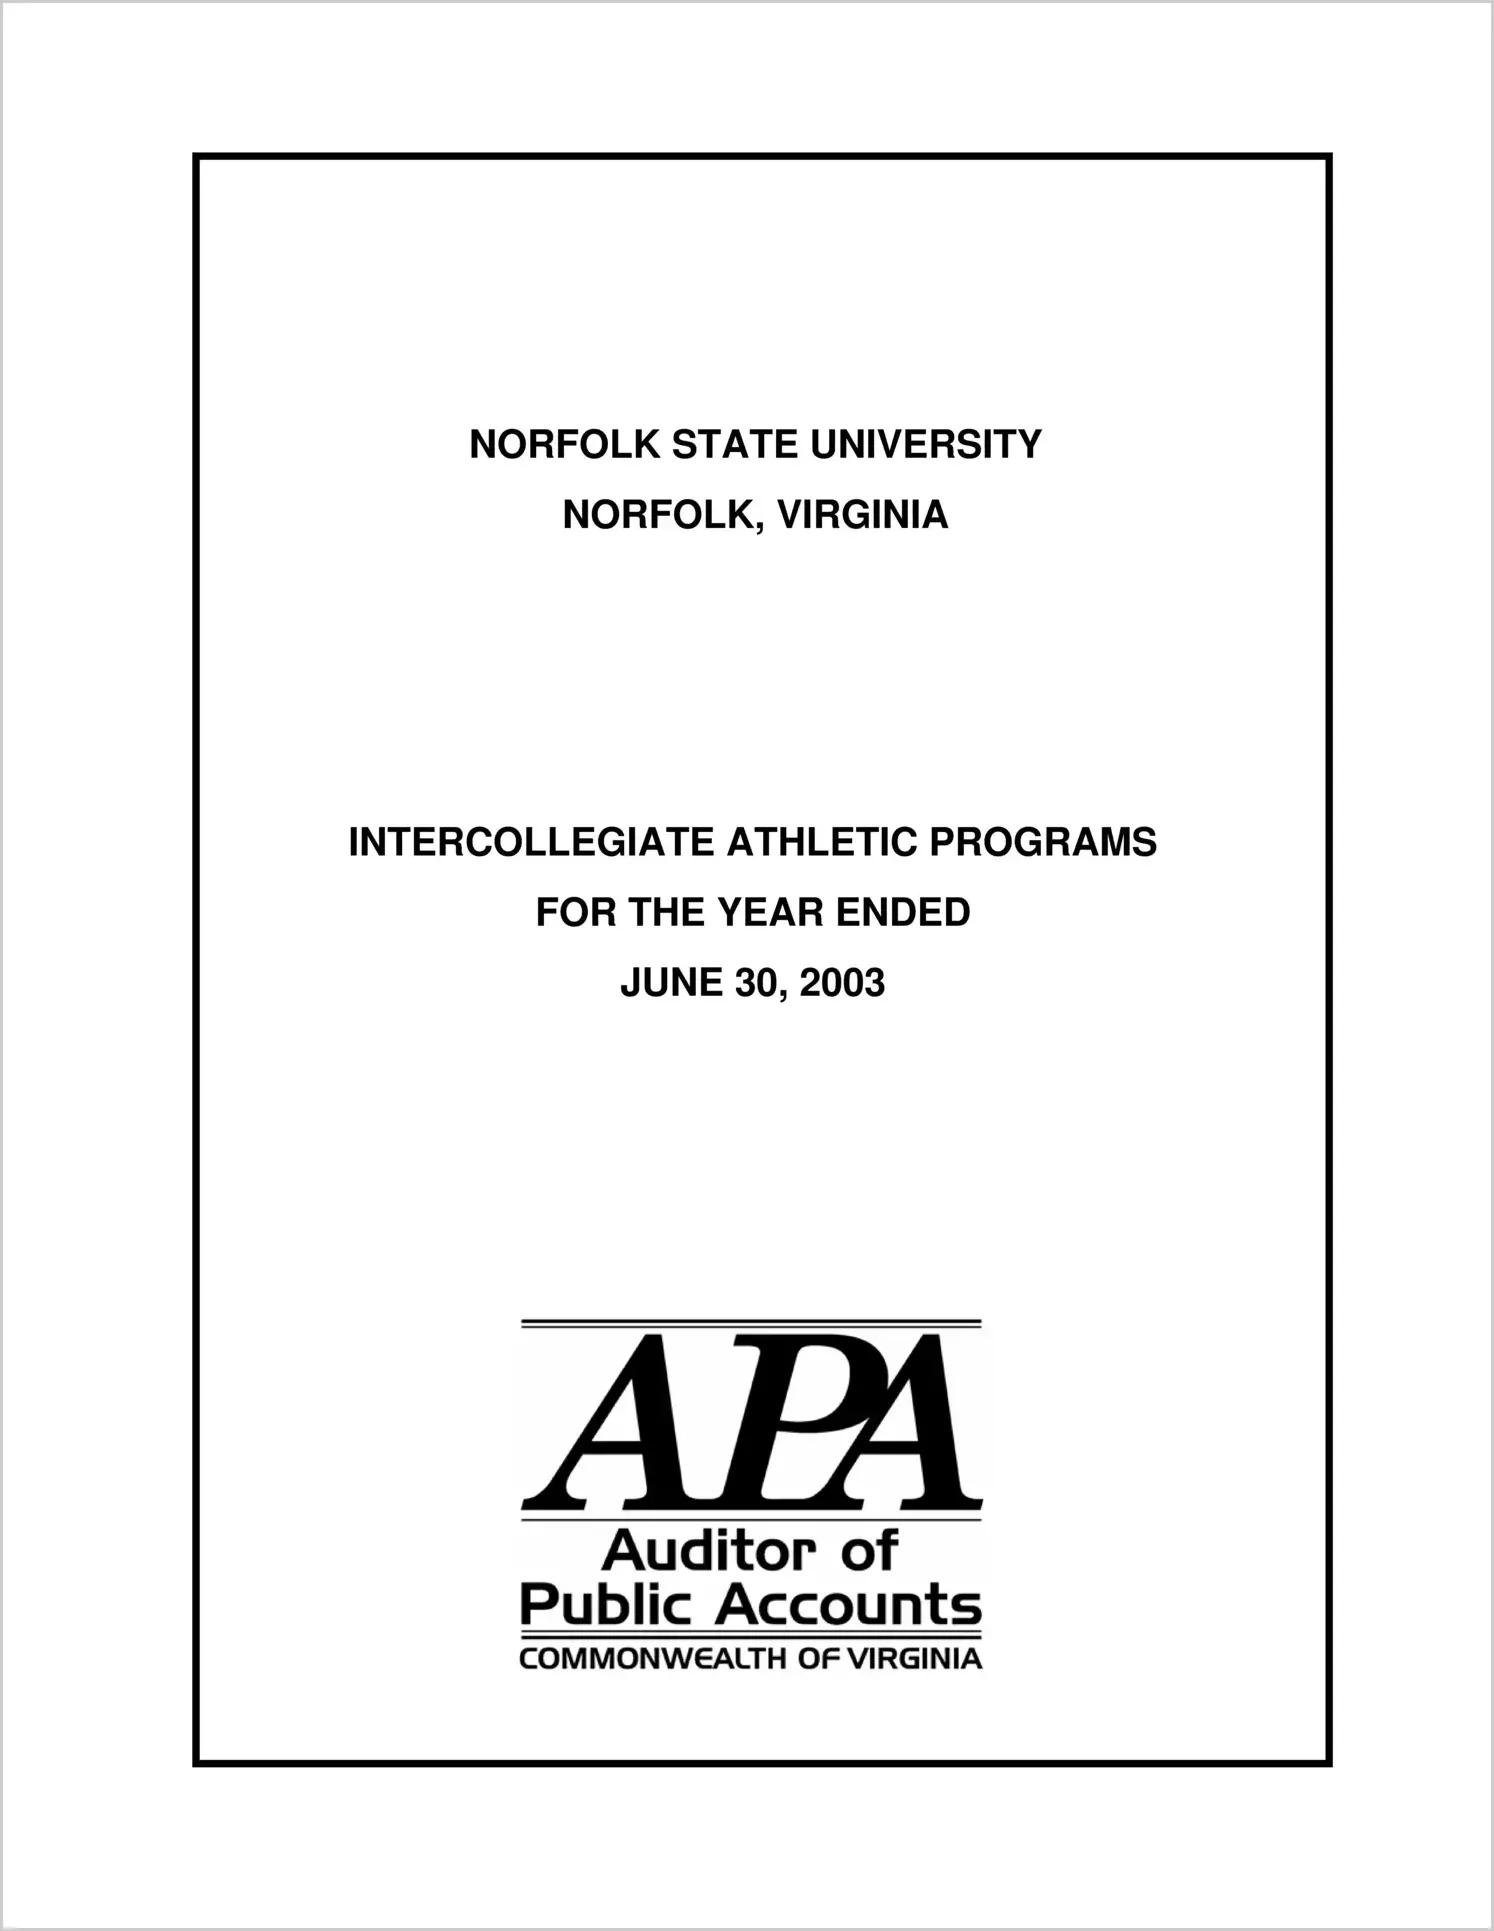 Norfolk State University Intercollegiate Athletic Programs for the year ended June 30, 2003